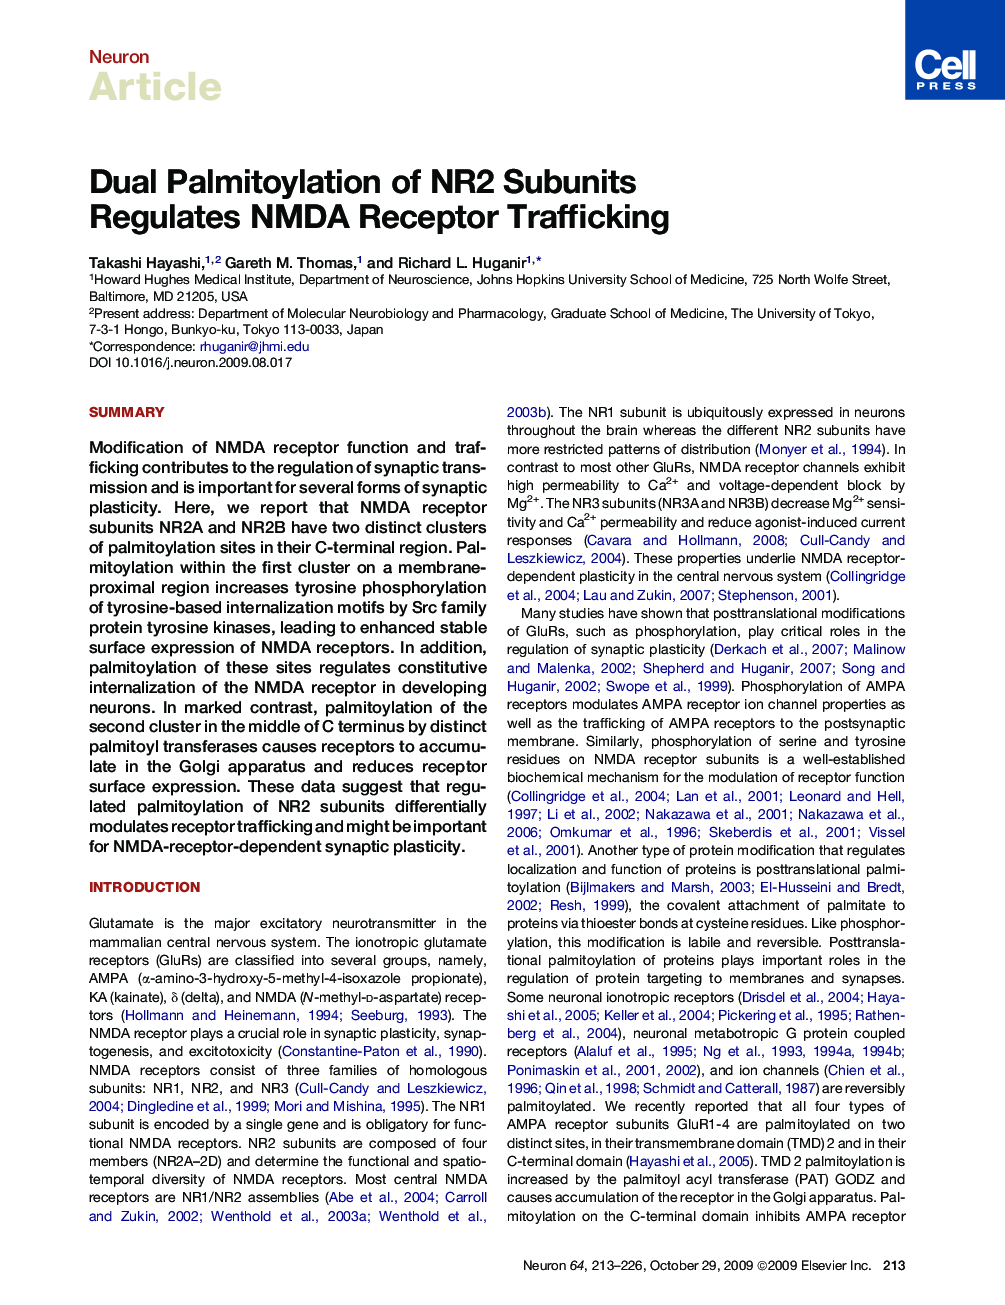 Dual Palmitoylation of NR2 Subunits Regulates NMDA Receptor Trafficking